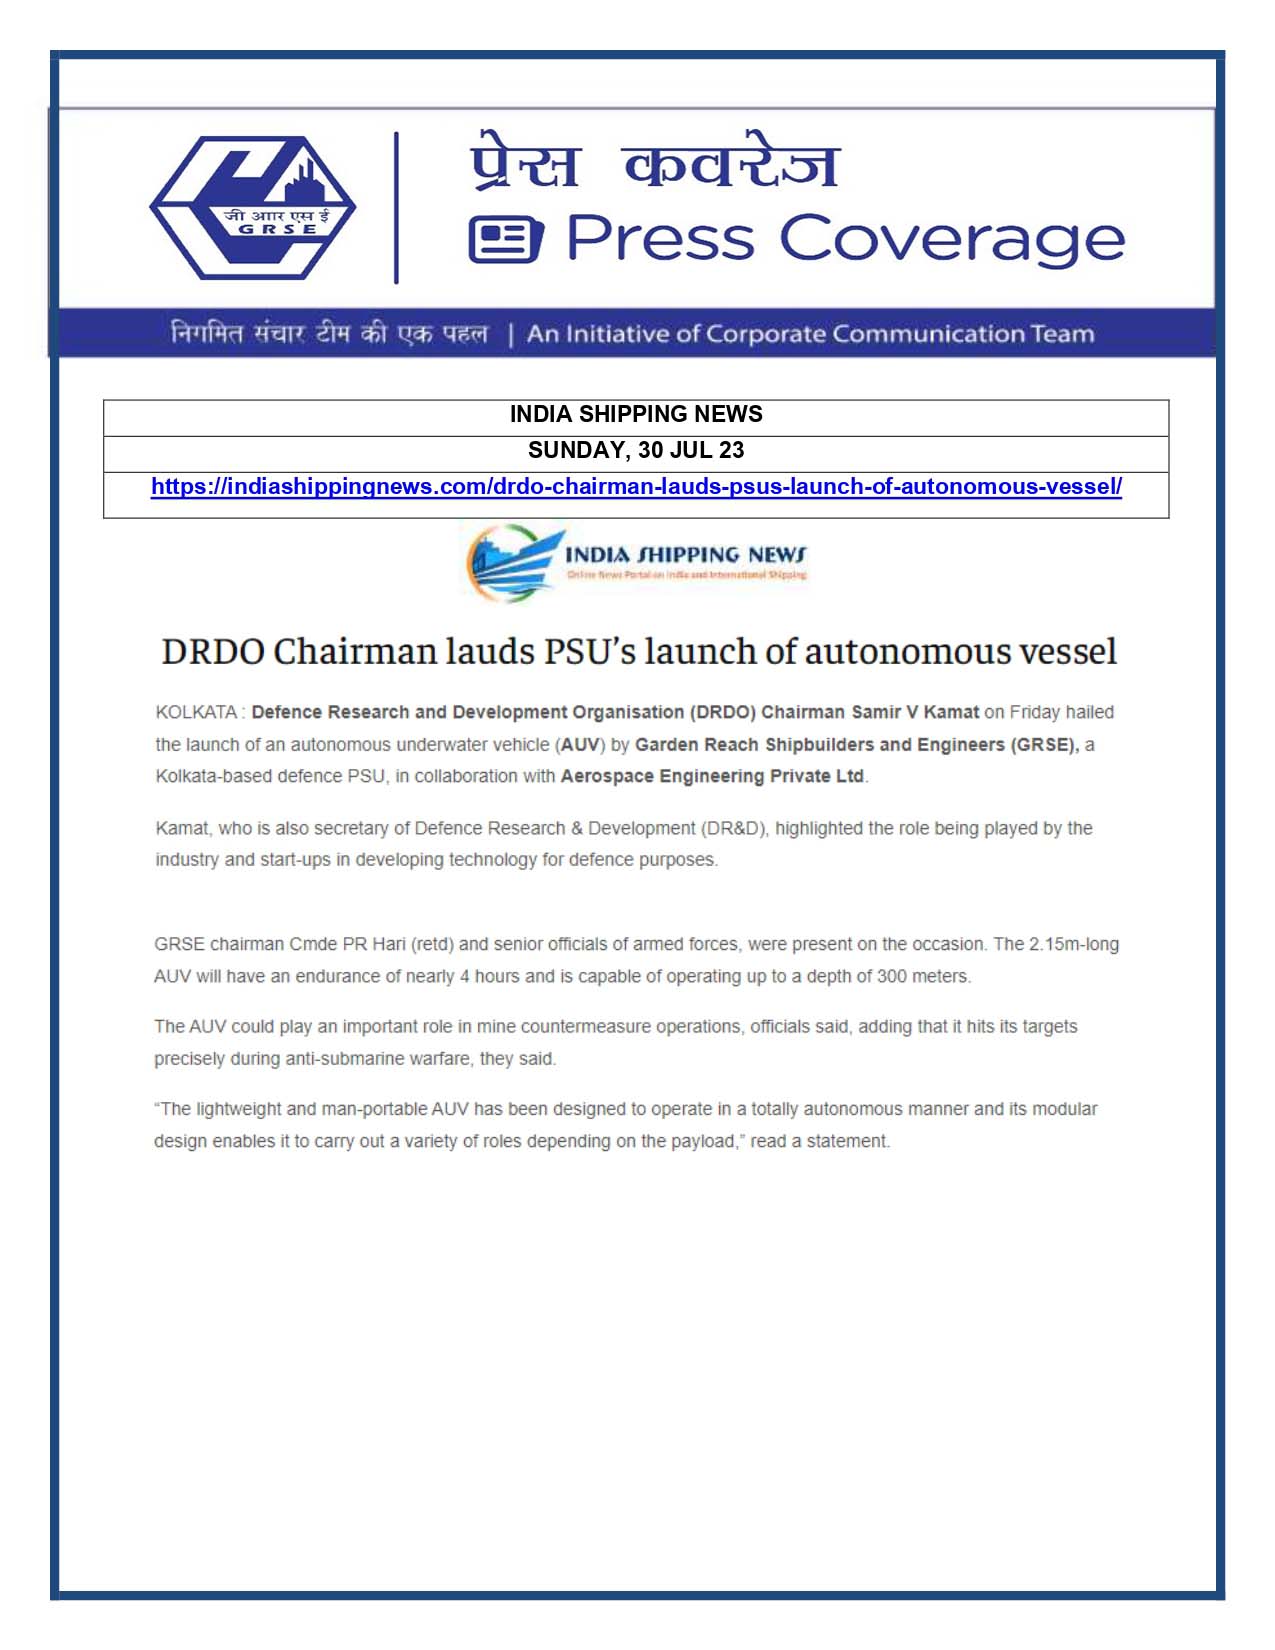 Press Coverage : India Shipping News, 30 Jul 23 : DRDO Chairman lauds PSU's launch of Autonomous Vessel